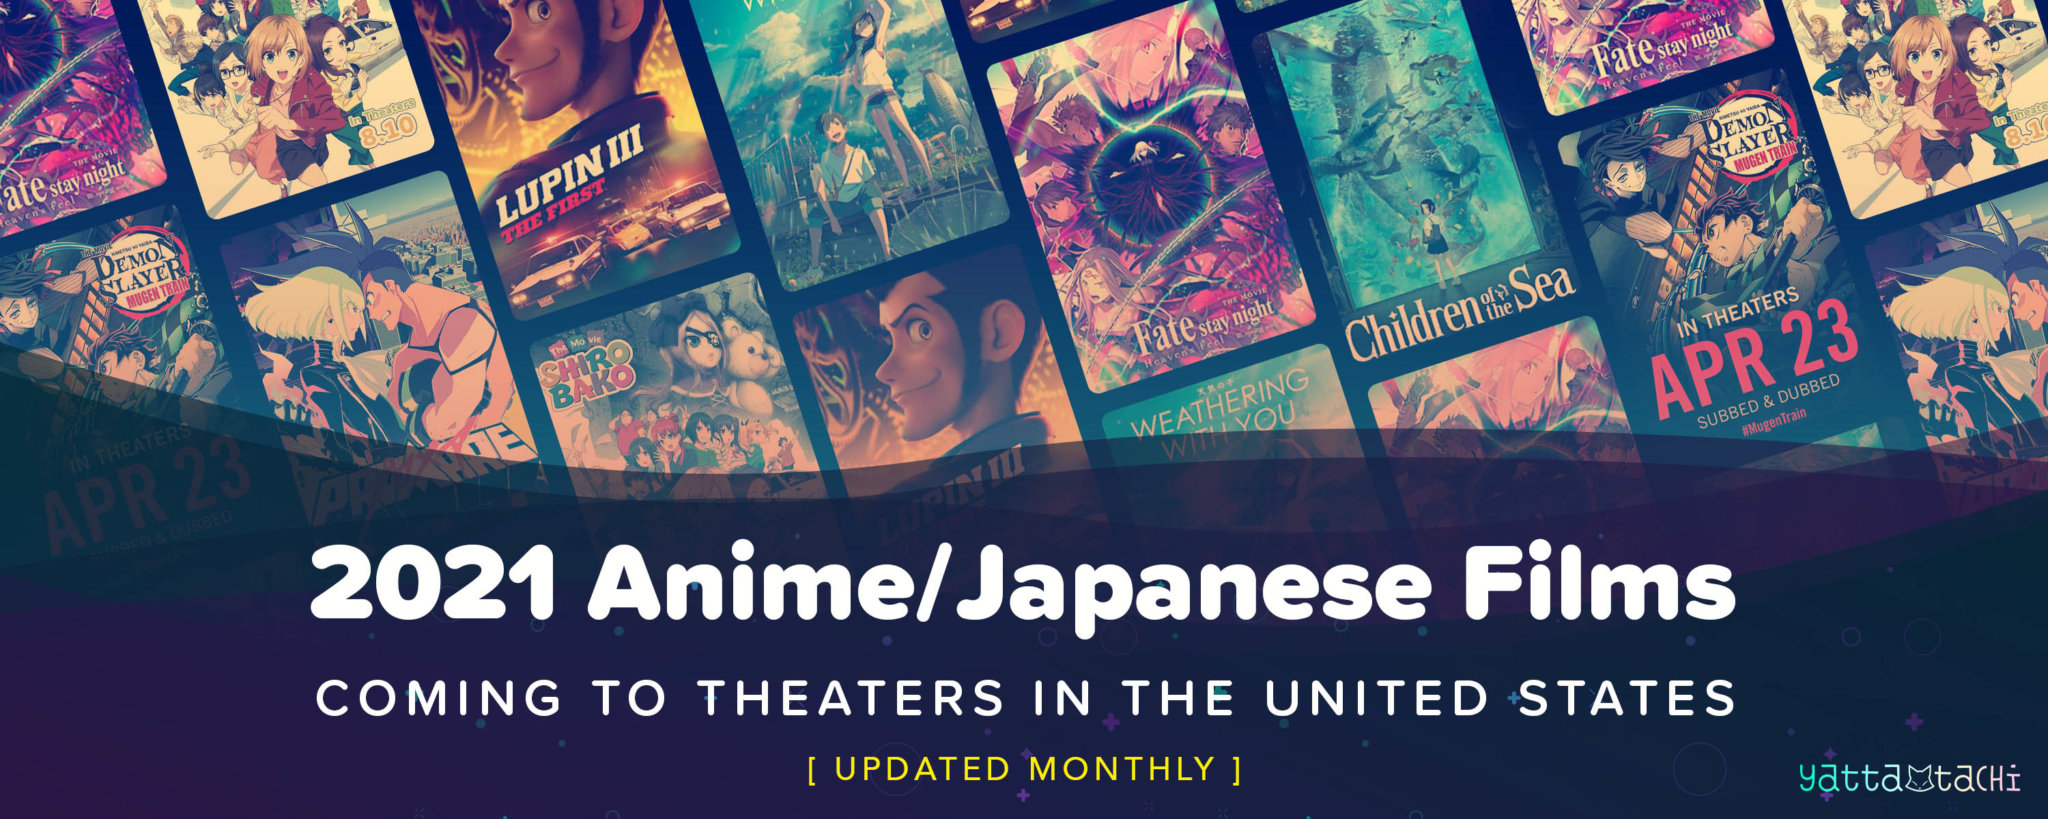 2021 Anime / Japanese Films Coming to U.S. Theaters YattaTachi